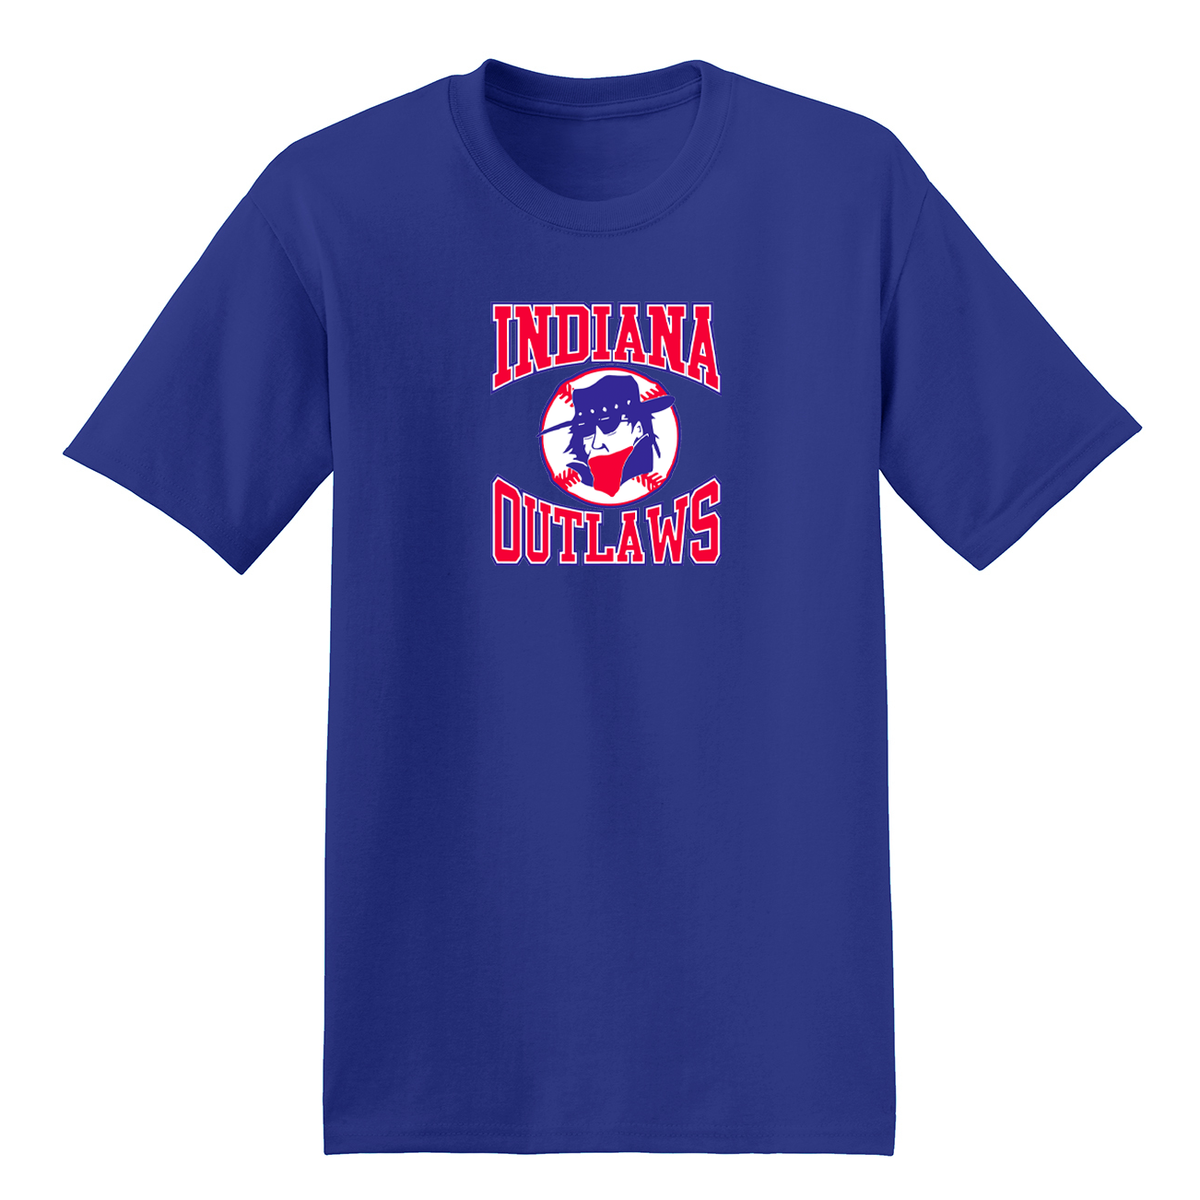 Southern Indiana Outlaws Baseball T-Shirt